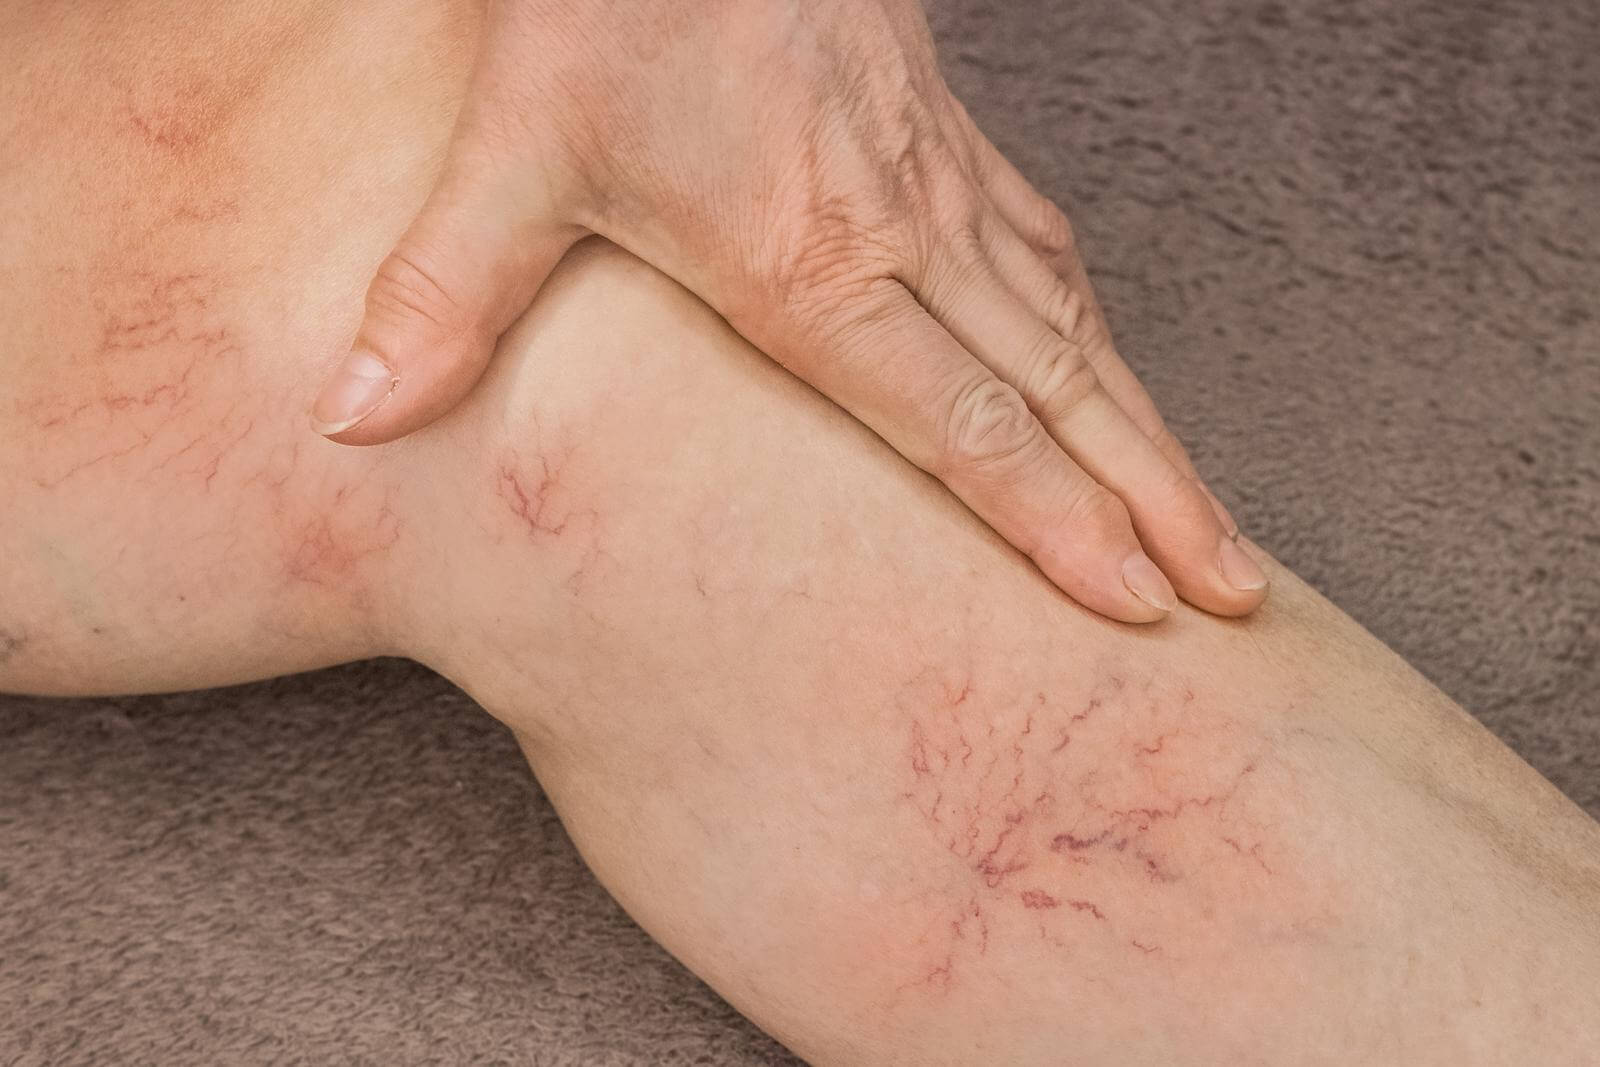 An elderly woman's hand touches her sick leg with vein thrombosis, varicose veins (spider veins).